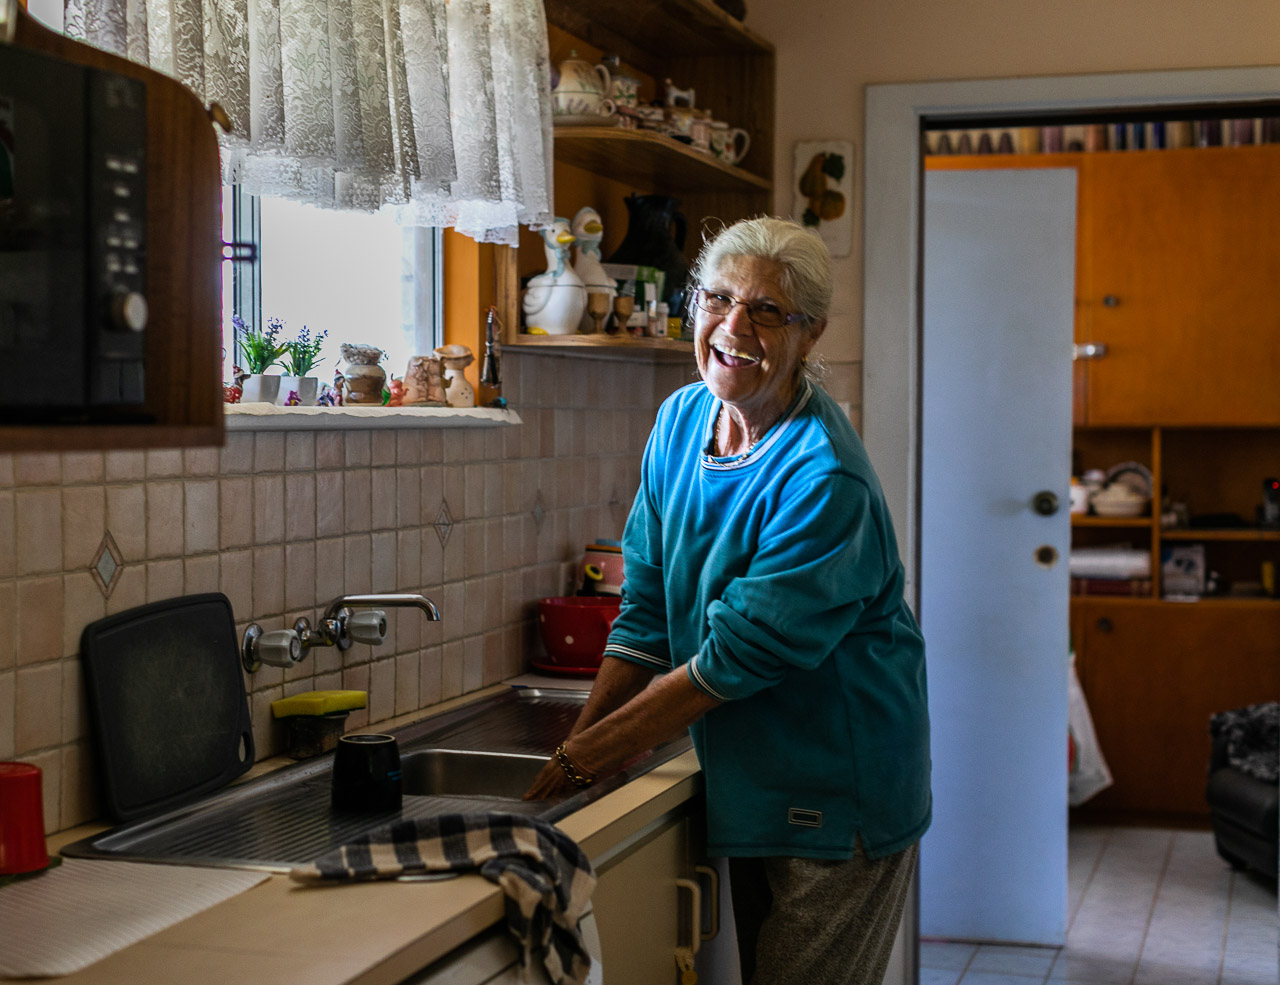 Elderly woman washing up in the kitchen